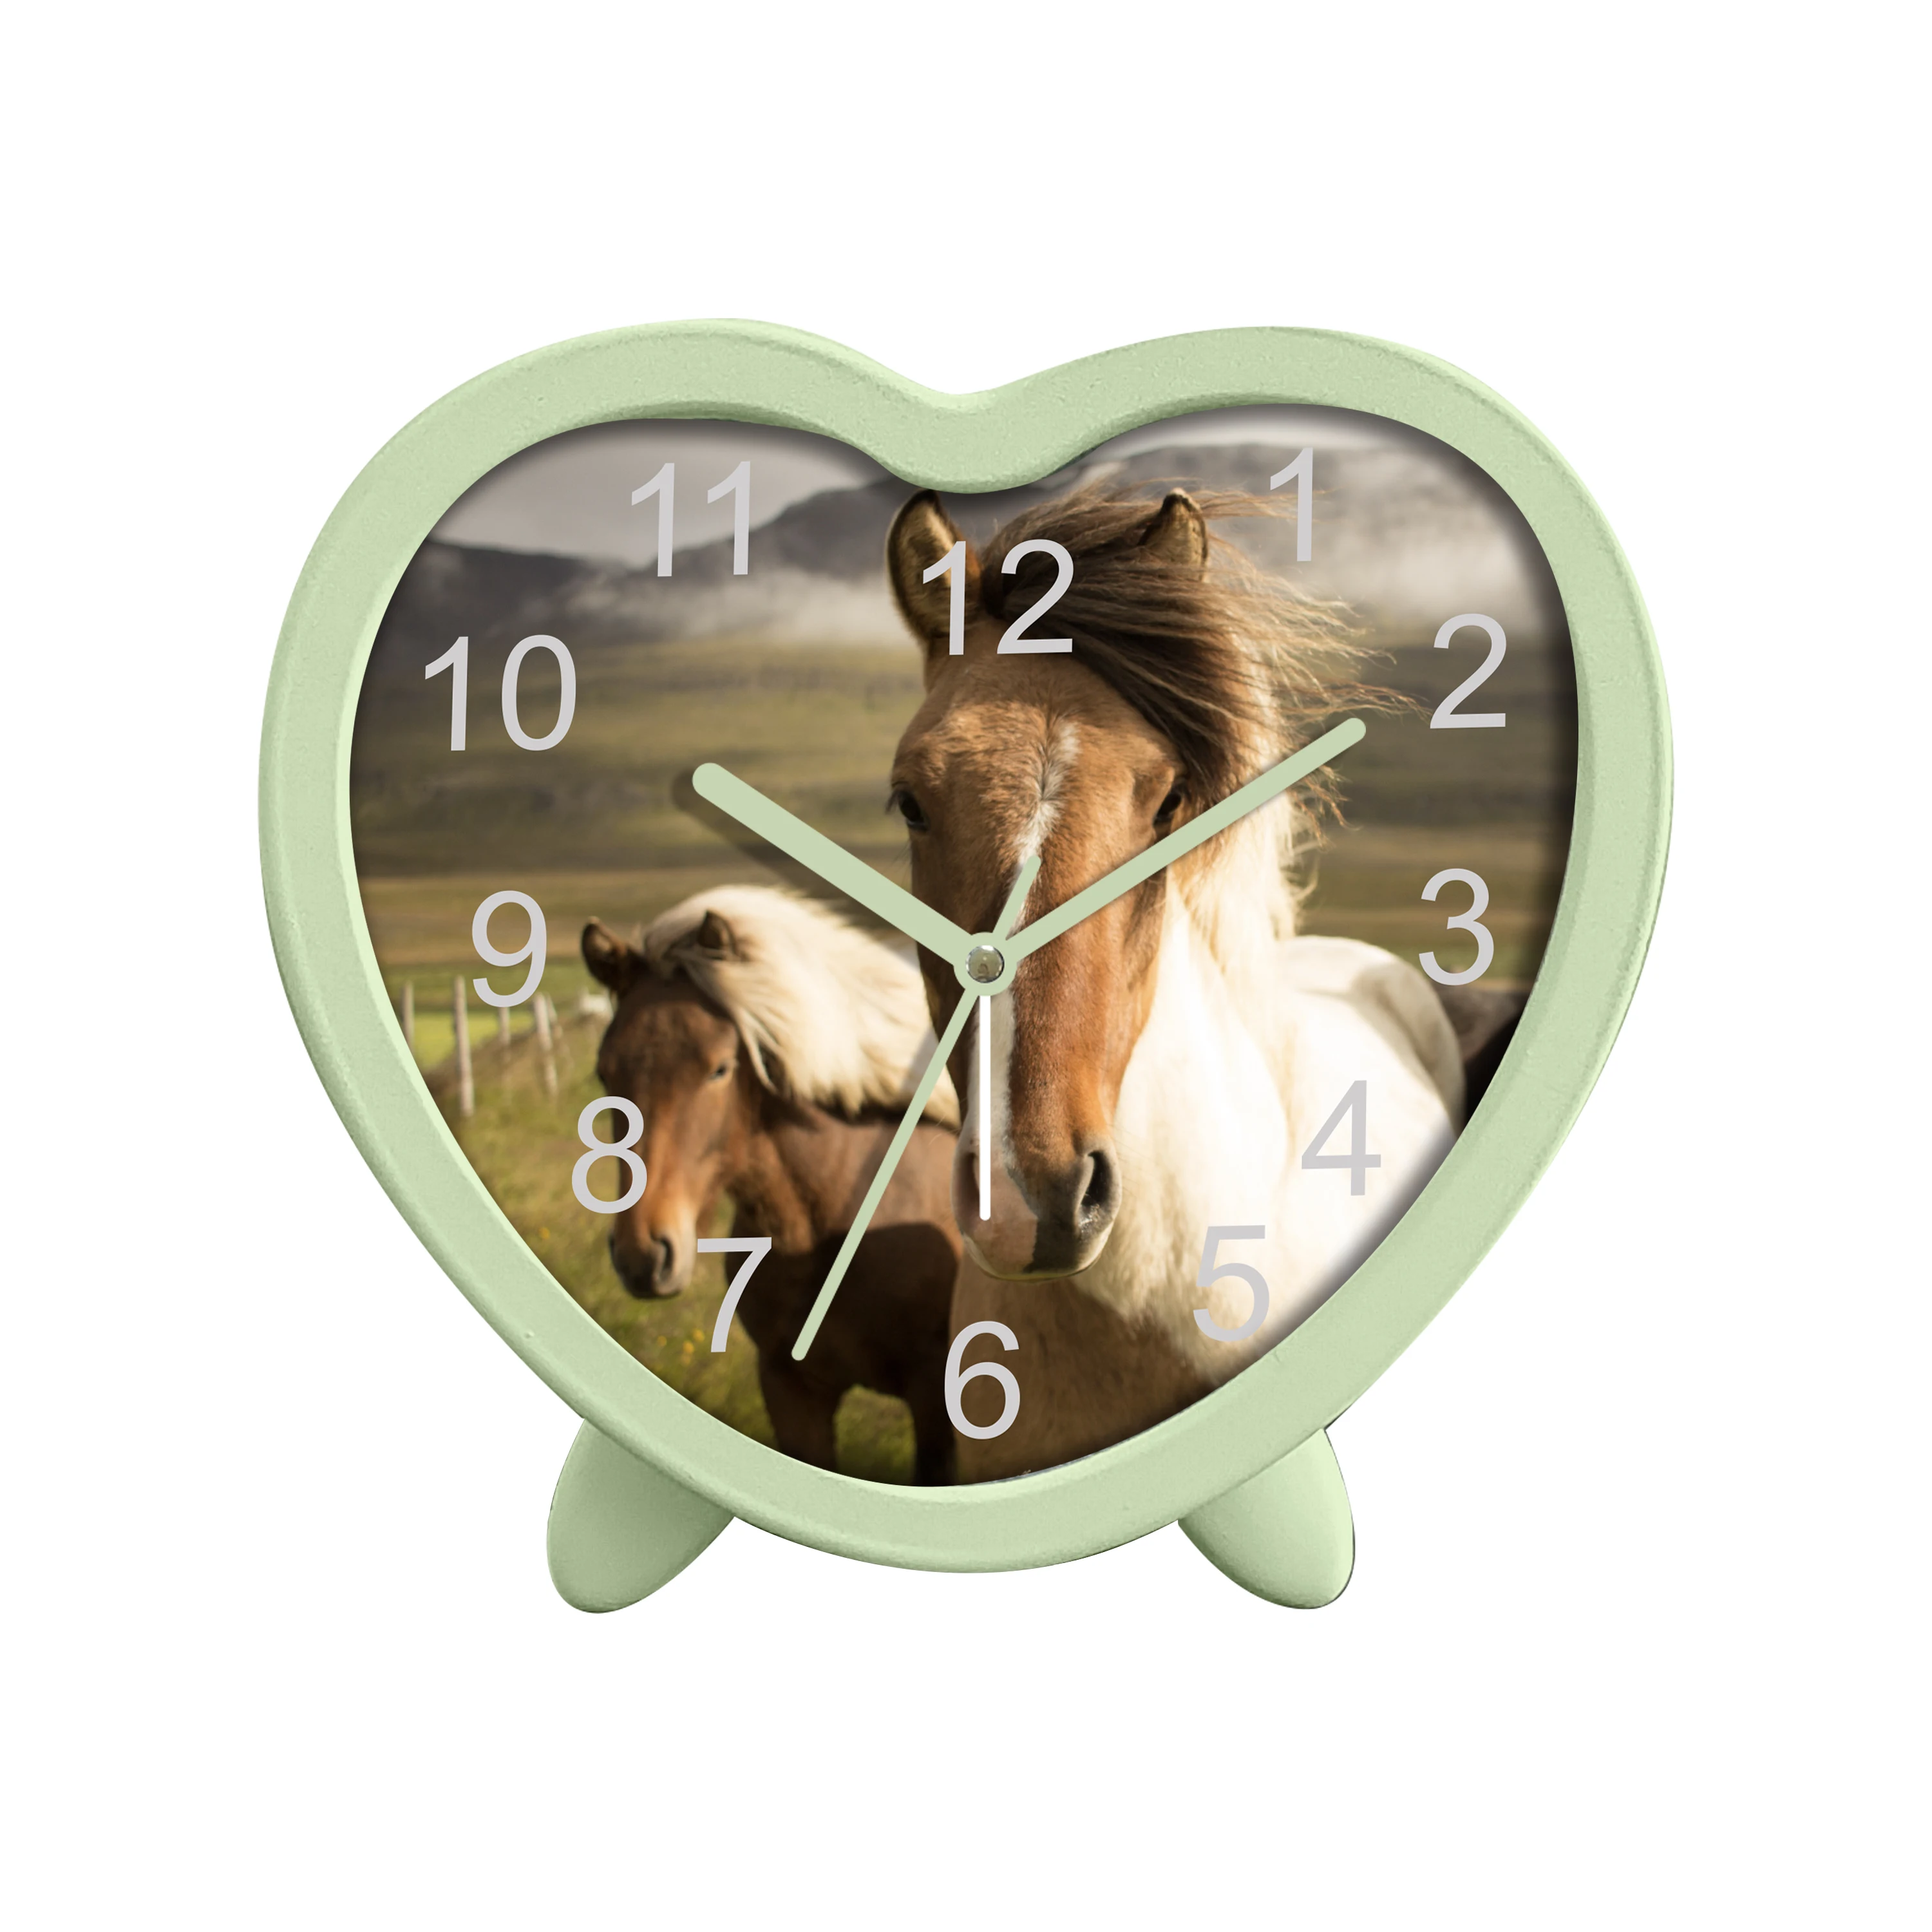 Cute Heart Shape Cartoon Design Girls Table Decorative Alarm Clock